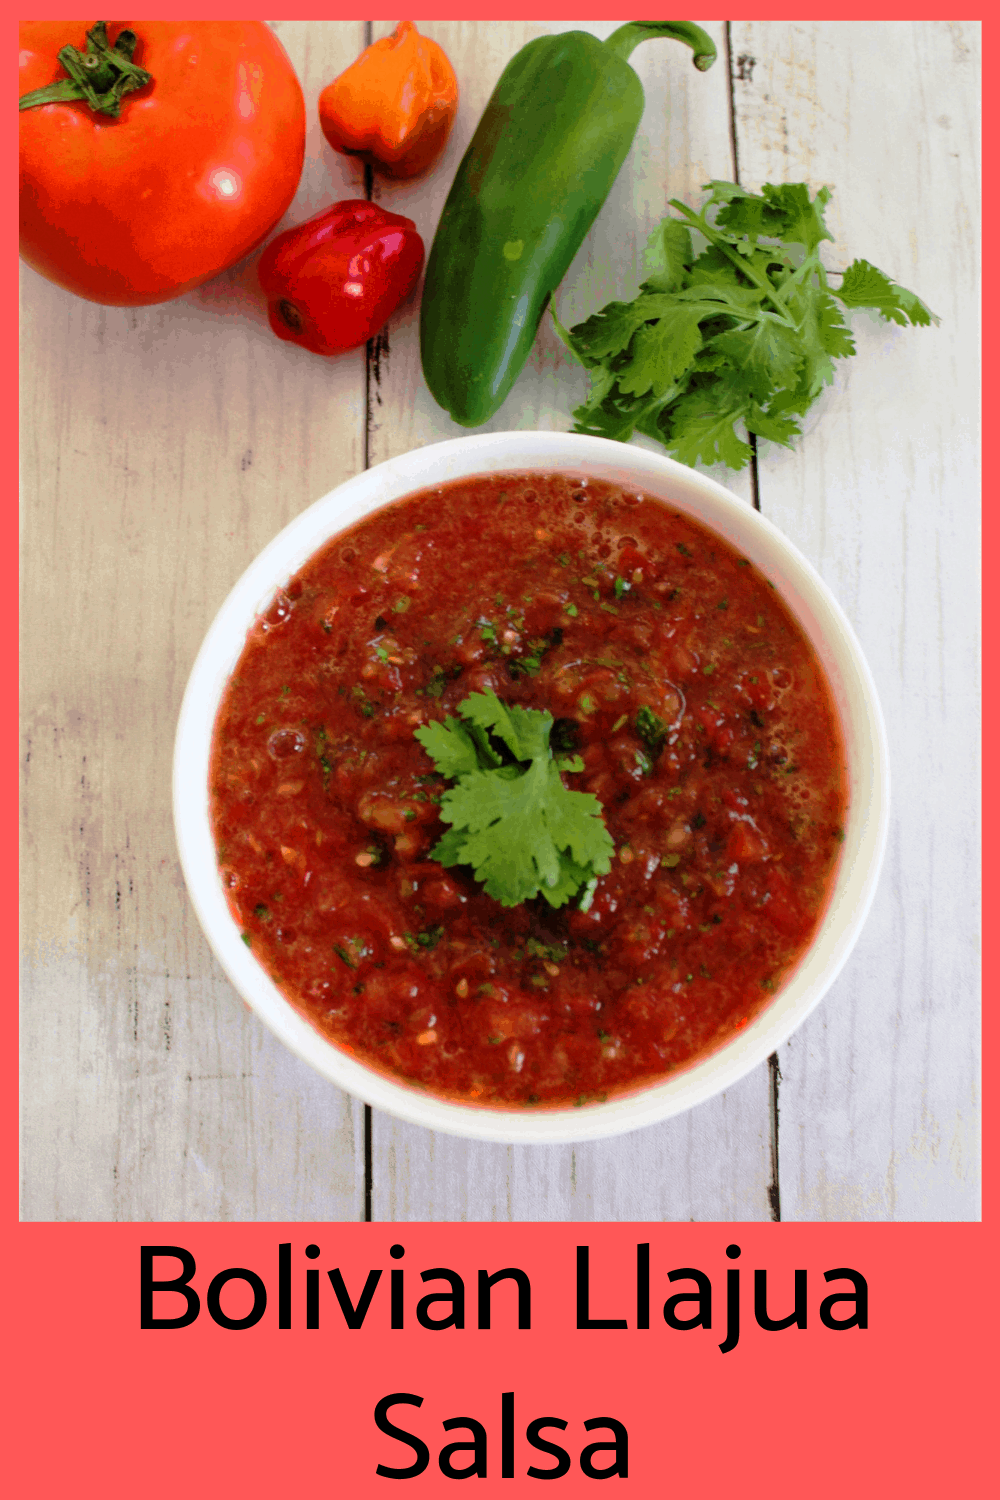 Bolivian Spicy Tomato Salsa Inspired by a Bolivian Llajua Recipe